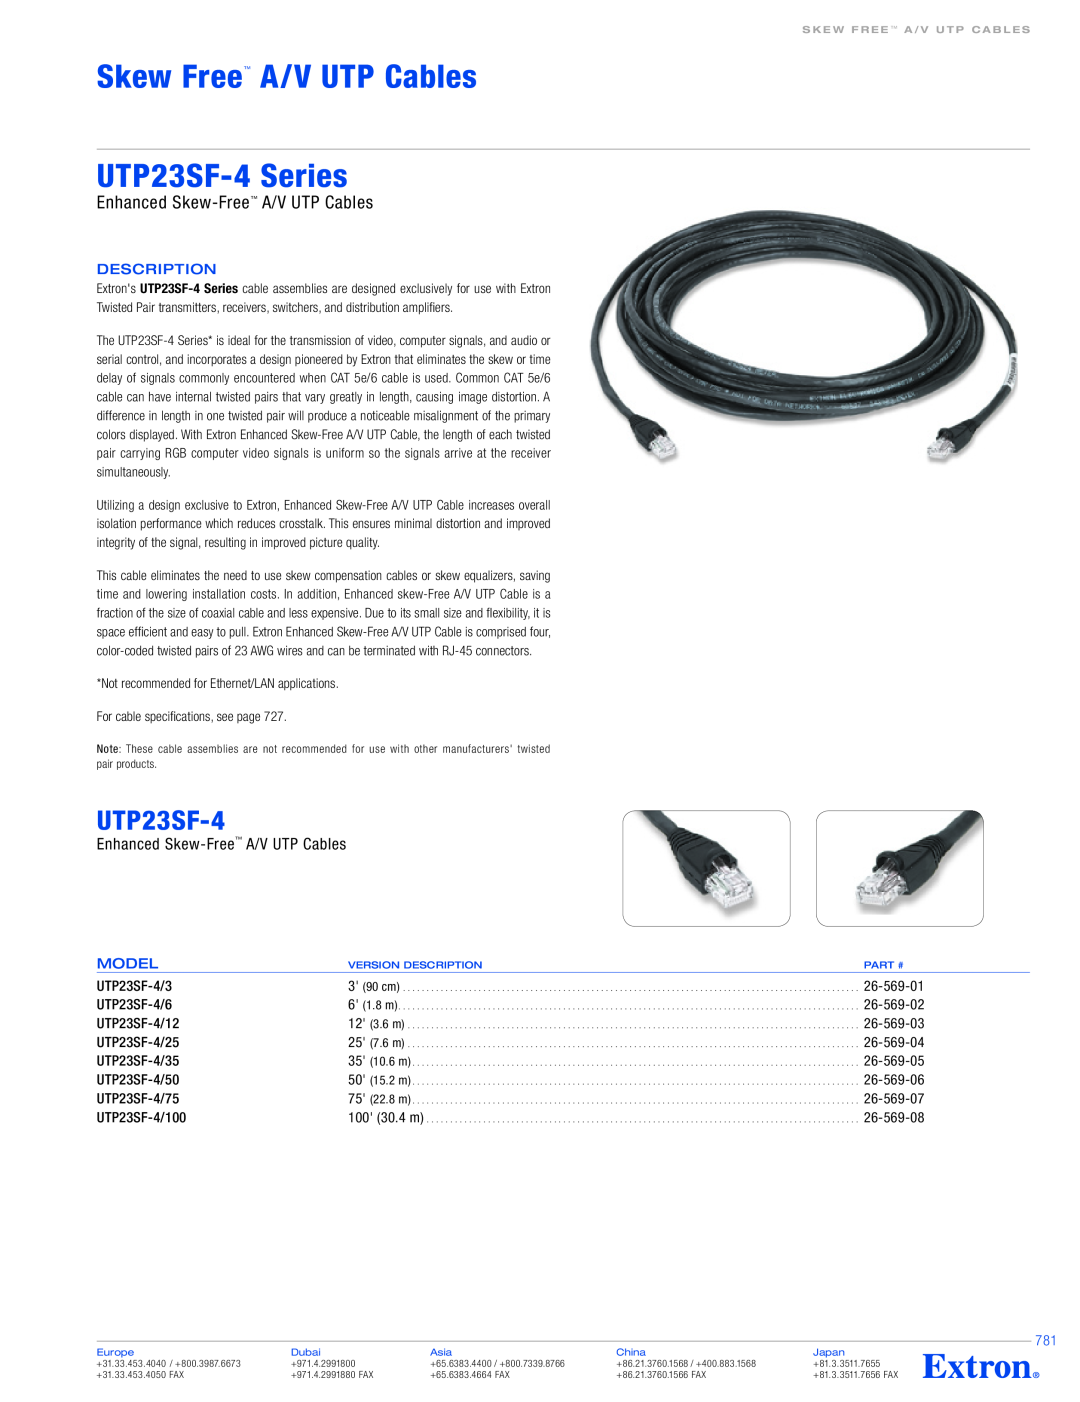 Extron electronic UTP23SF-4/6 specifications Skew Free A/V UTP Cables UTP23SF-4 Series, Enhanced Skew-Free A/V UTP Cables 